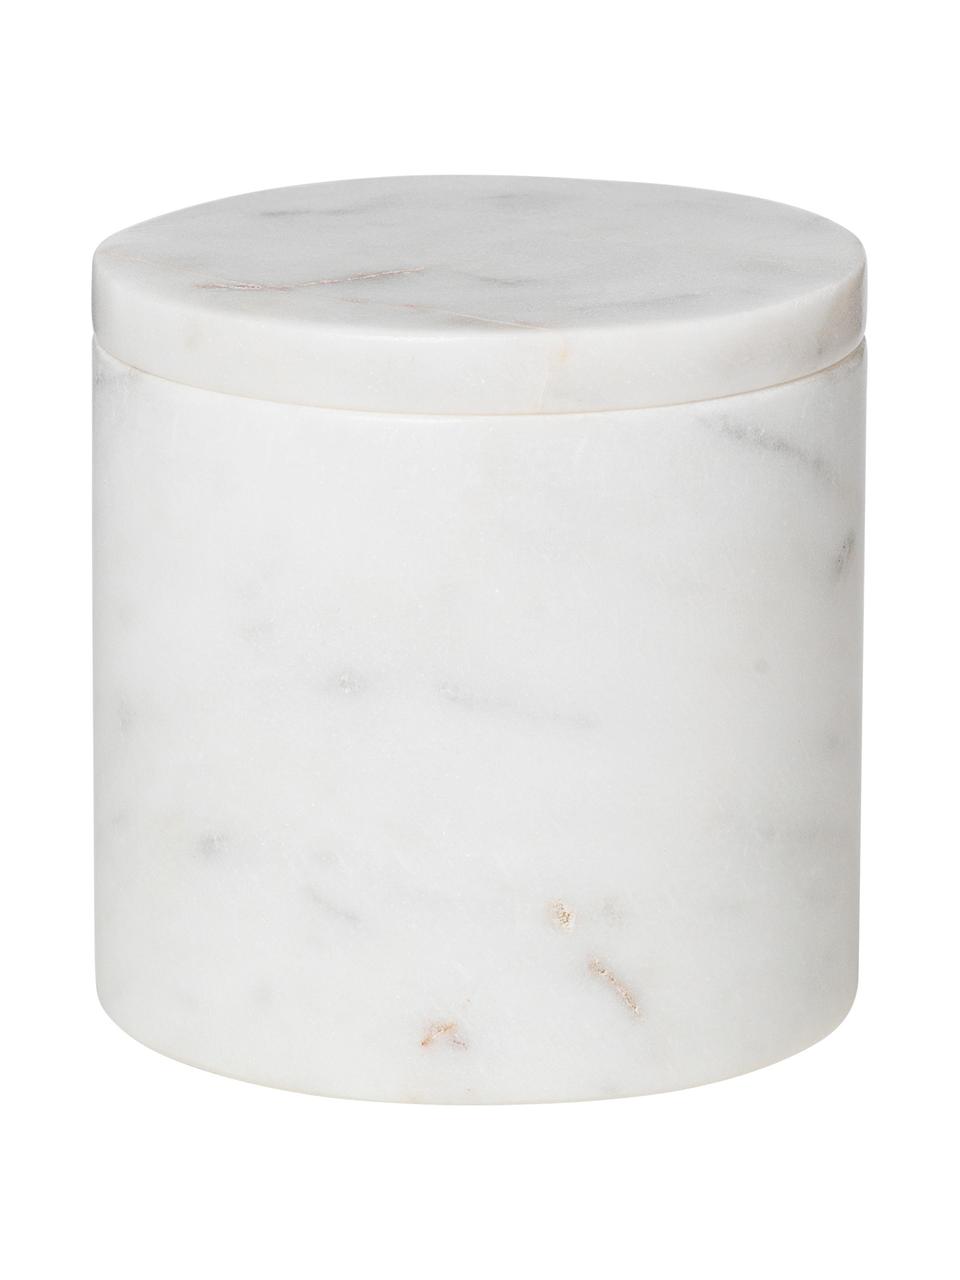 Marmor-Aufbewahrungsdose Osvald, Marmor, Weiss, marmoriert, Ø 10 x H 10 cm